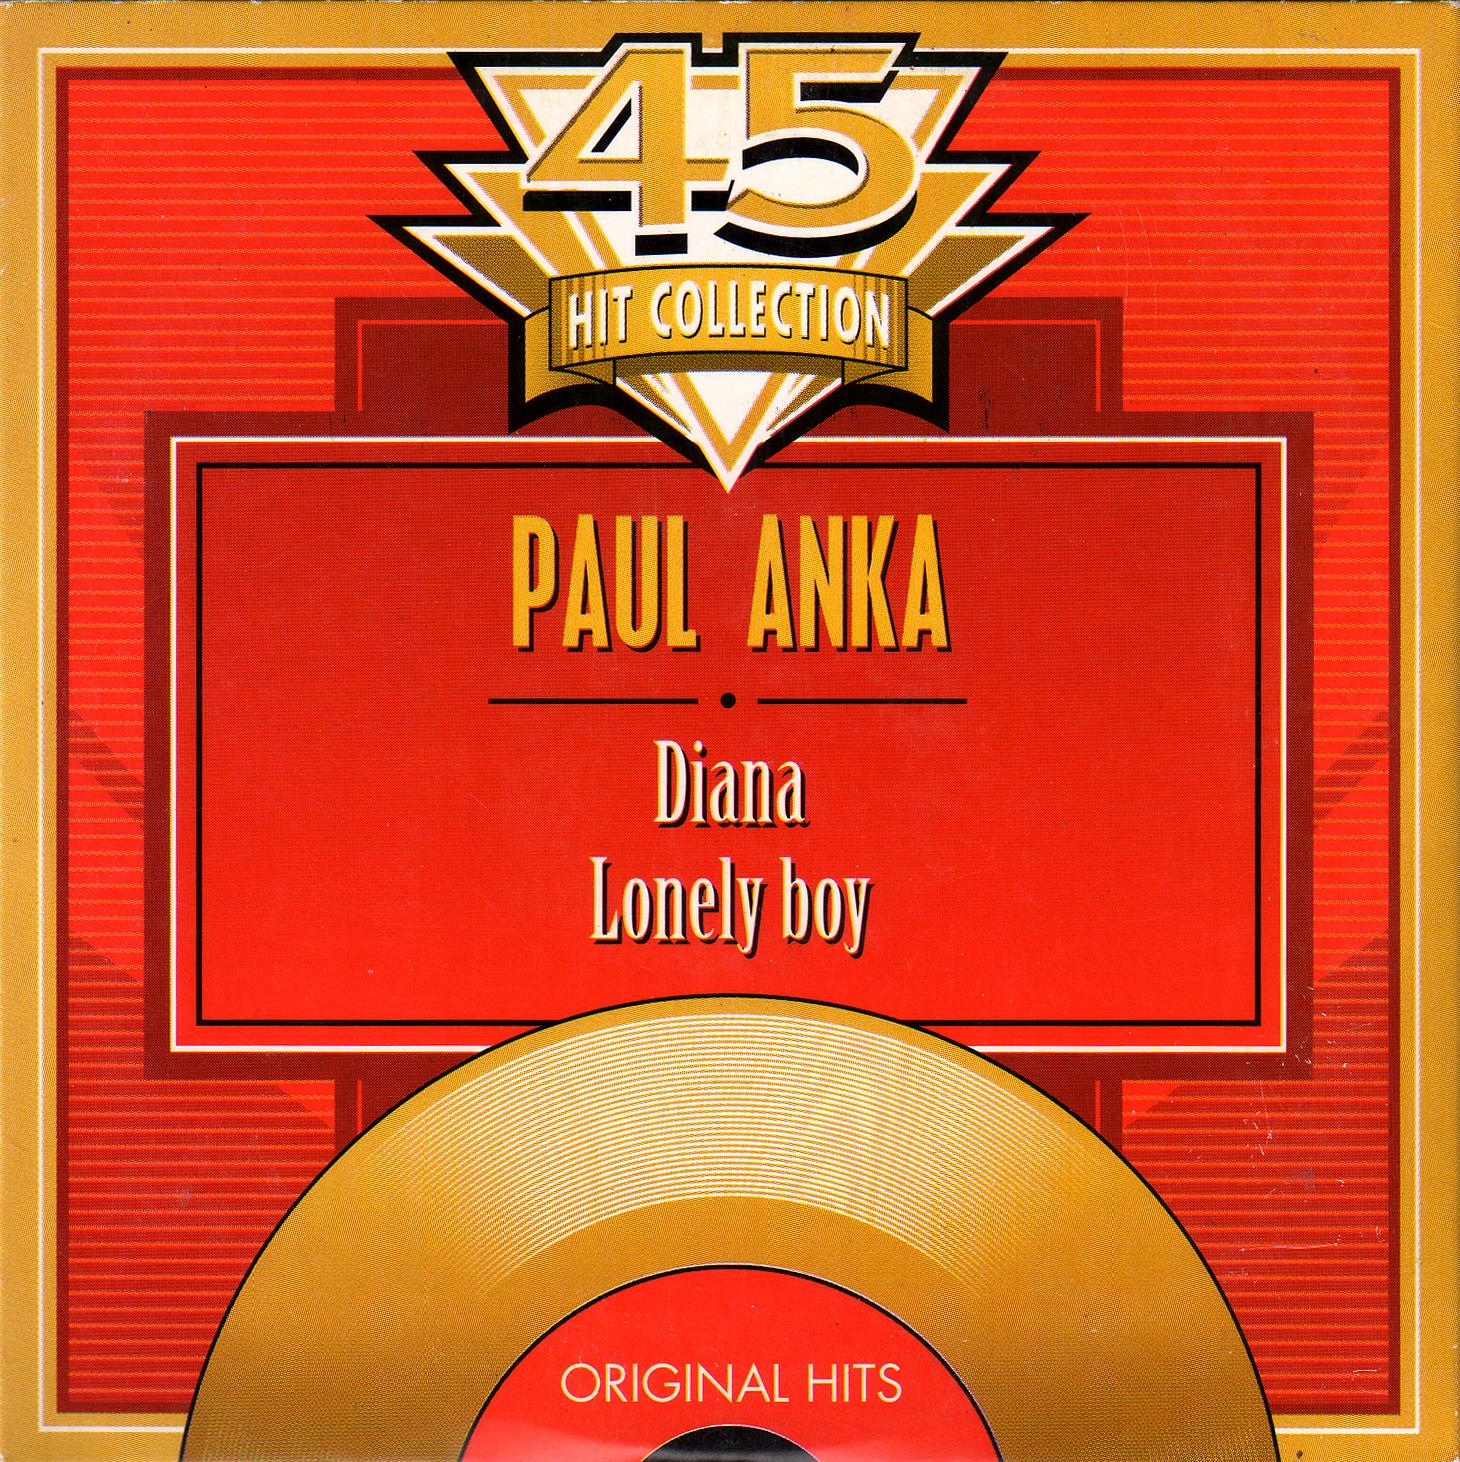 Paul Anka - Diana (Cds)(1957)